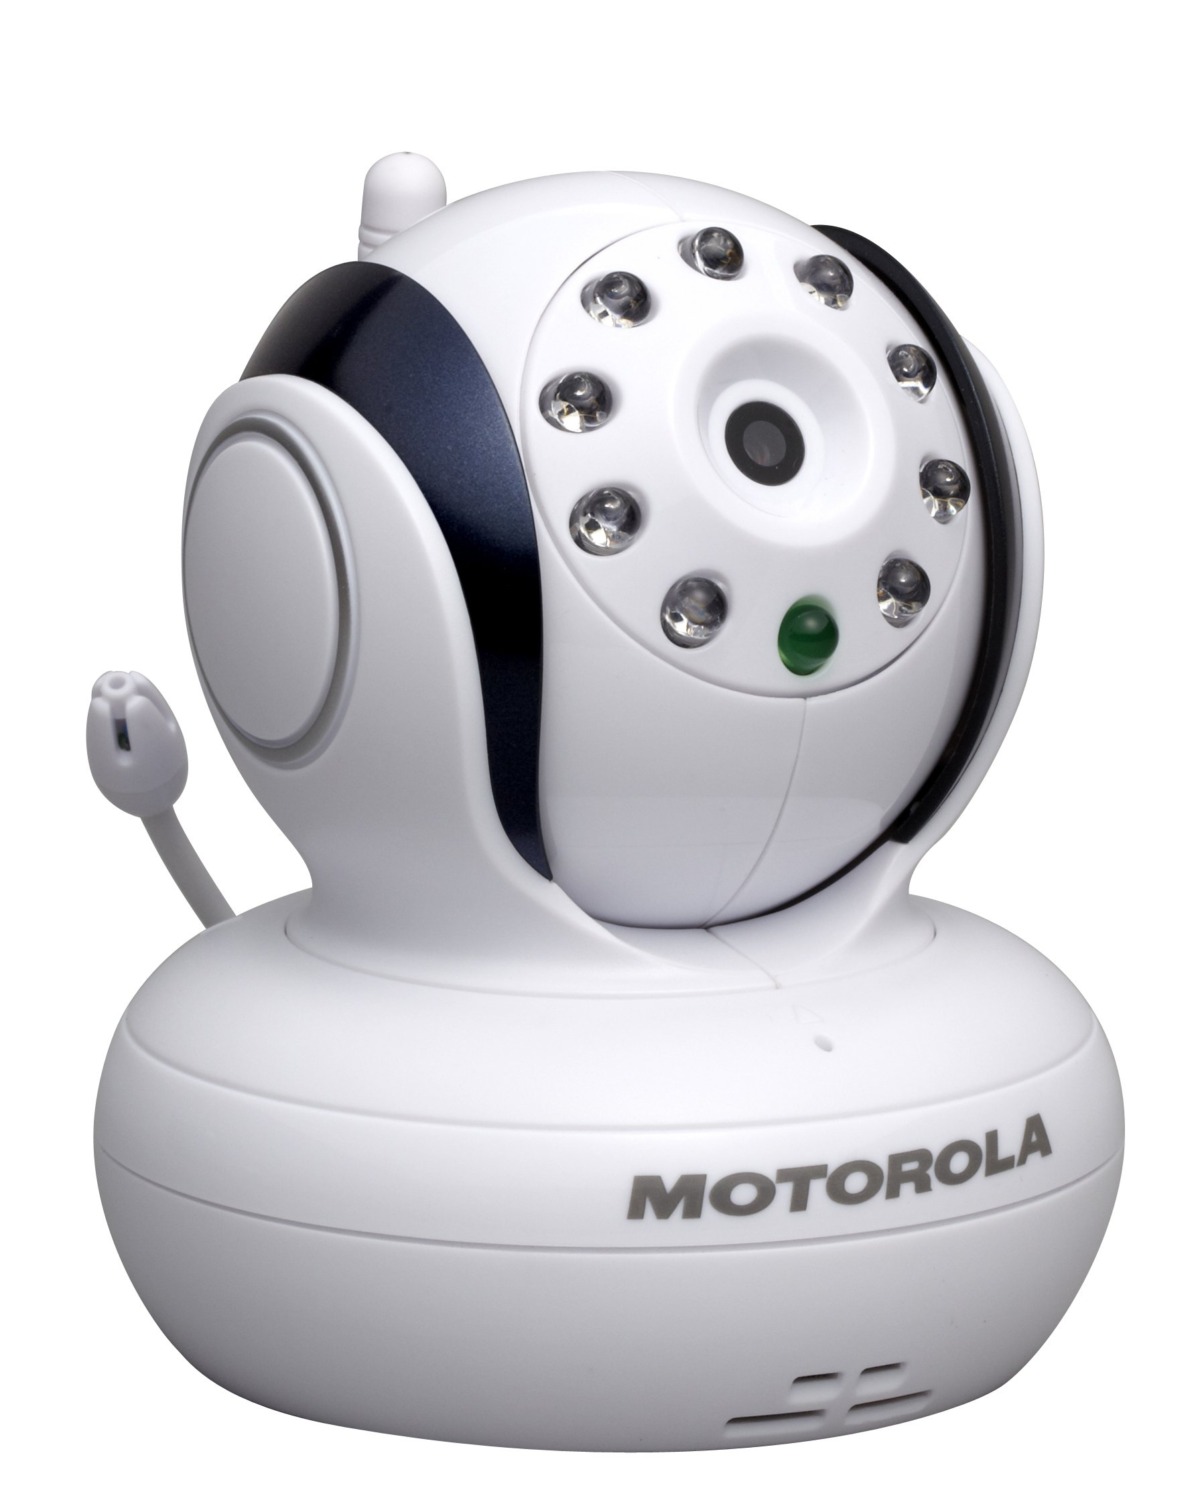 Motorola Additional Camera for Motorola MBP33 Baby Monitor | The Storepaperoomates Retail Market - Fast Affordable Shopping